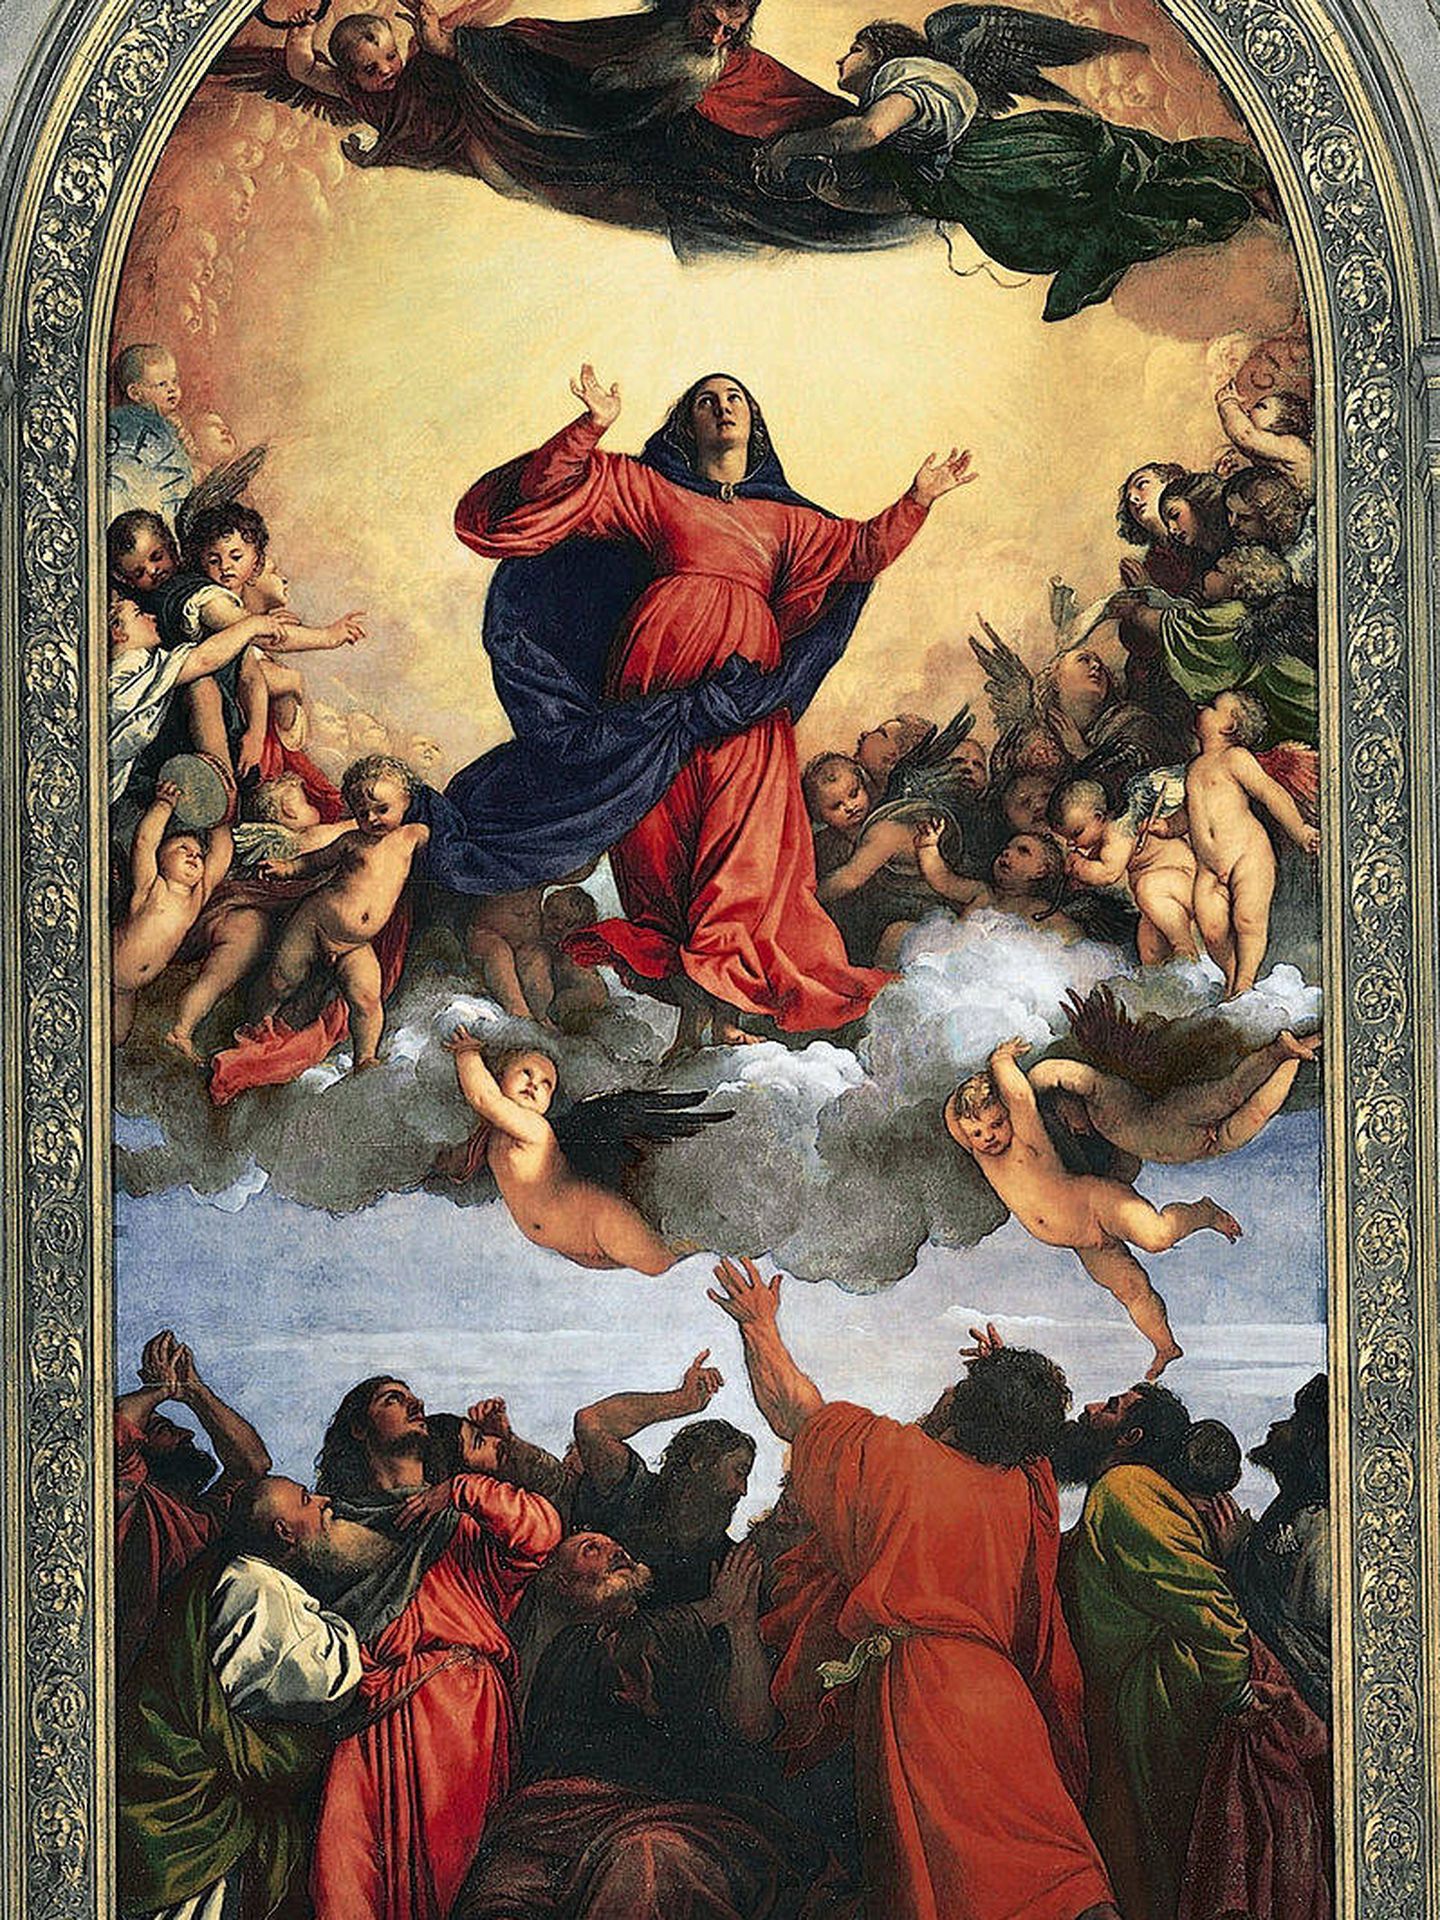 Óleo sobre lienzo que Tiziano pintó para la iglesia de Santa María dei Frari, en Venecia. (C.C.)